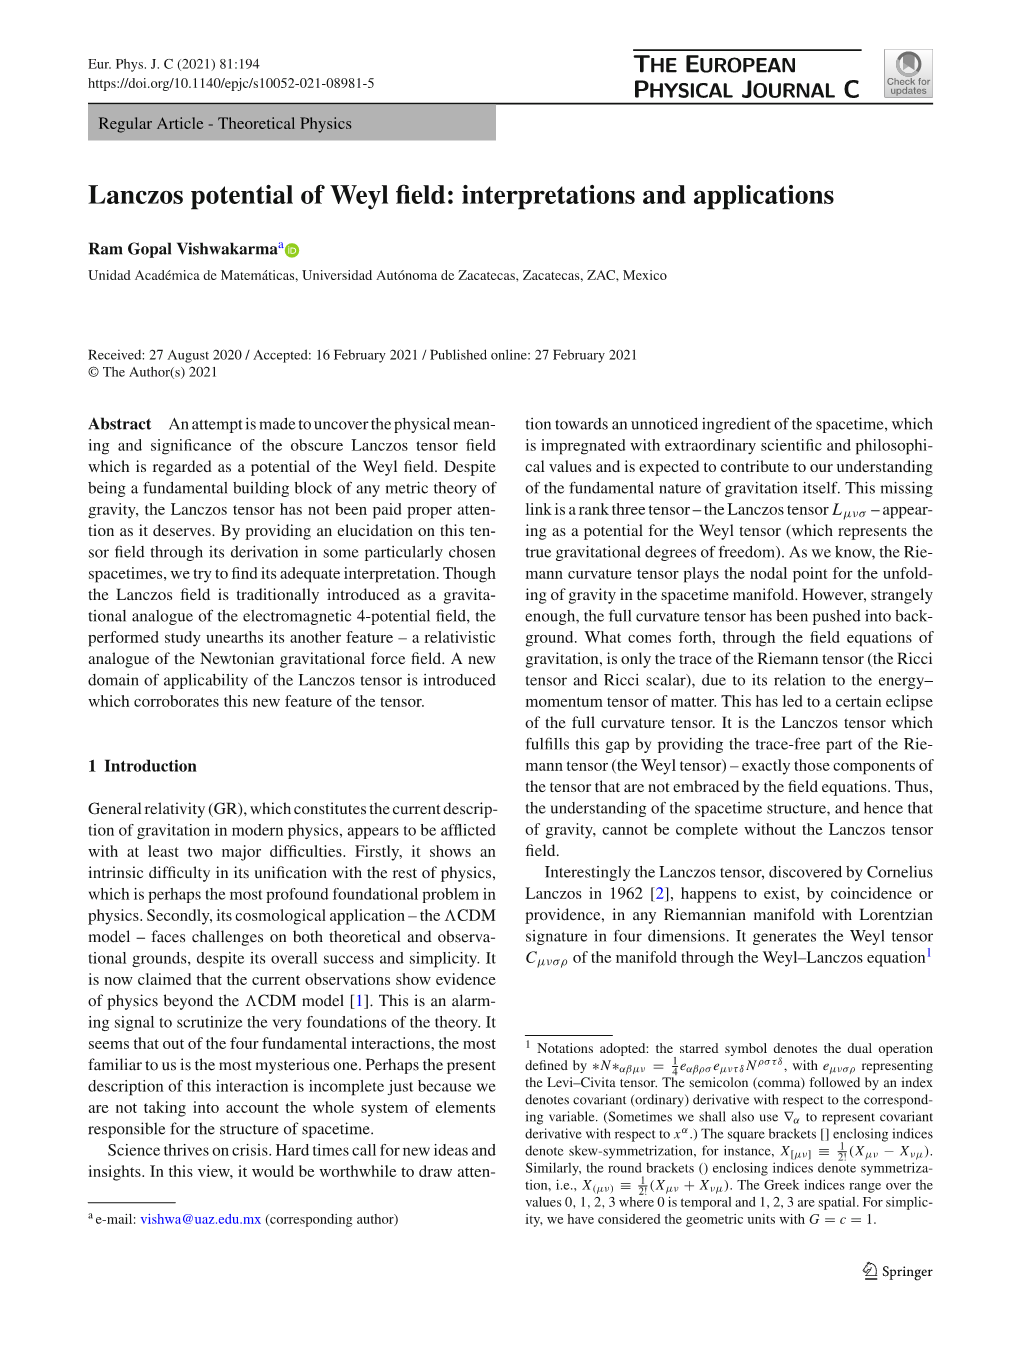 Lanczos Potential of Weyl Field: Interpretations and Applications